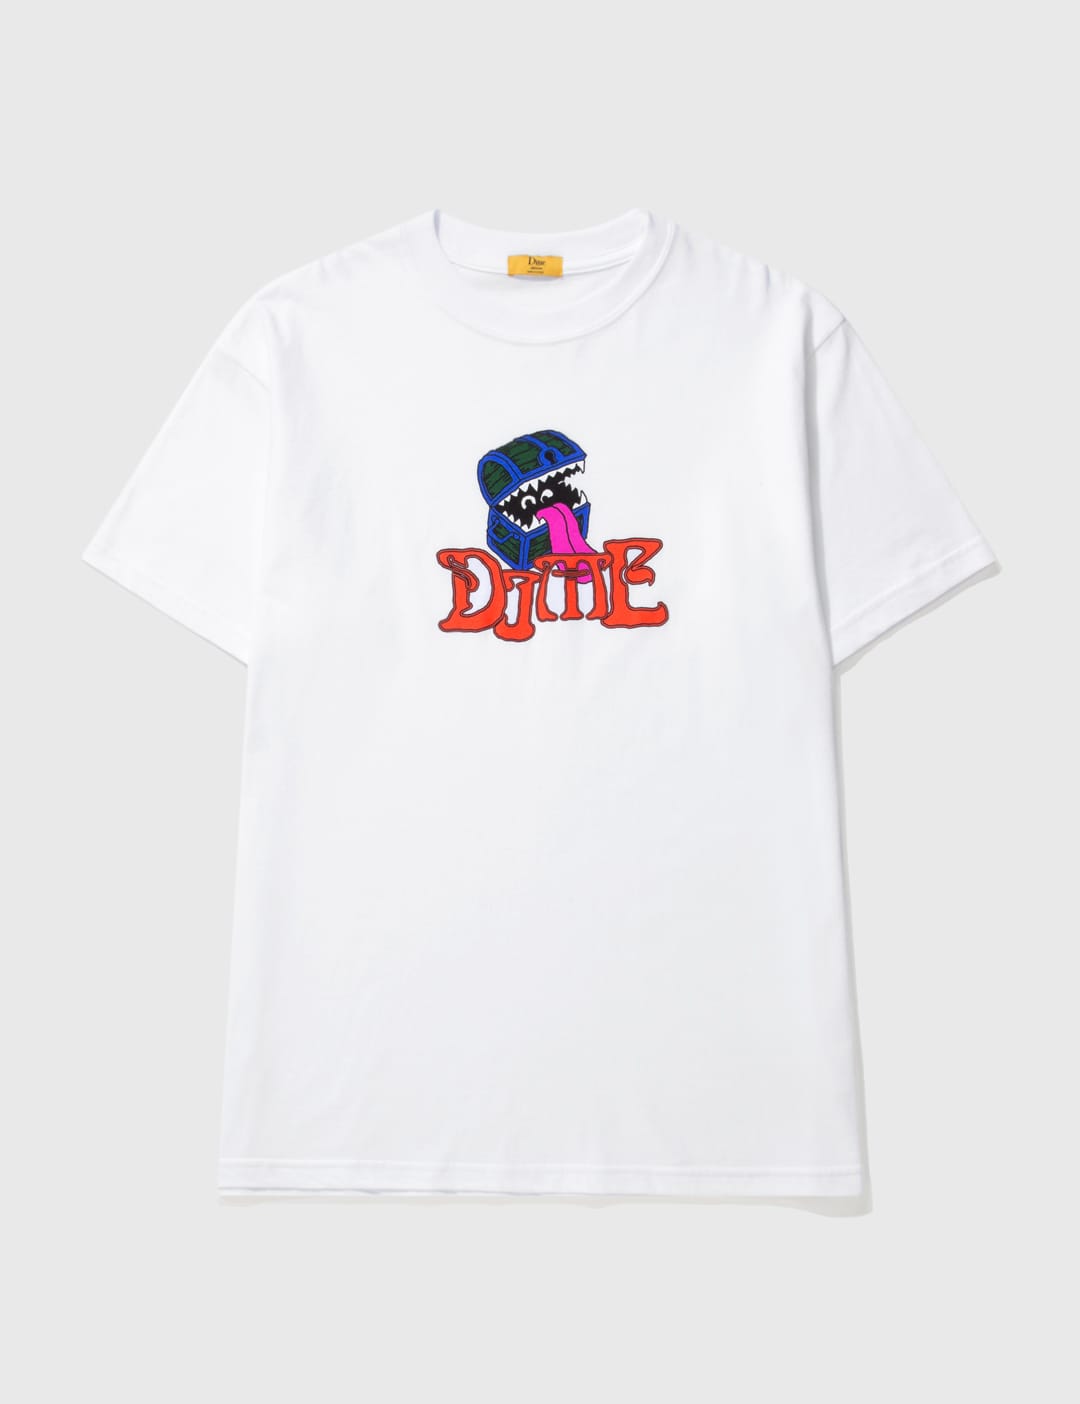 Dime - ミミック Tシャツ | HBX - ハイプビースト(Hypebeast)が厳選 ...